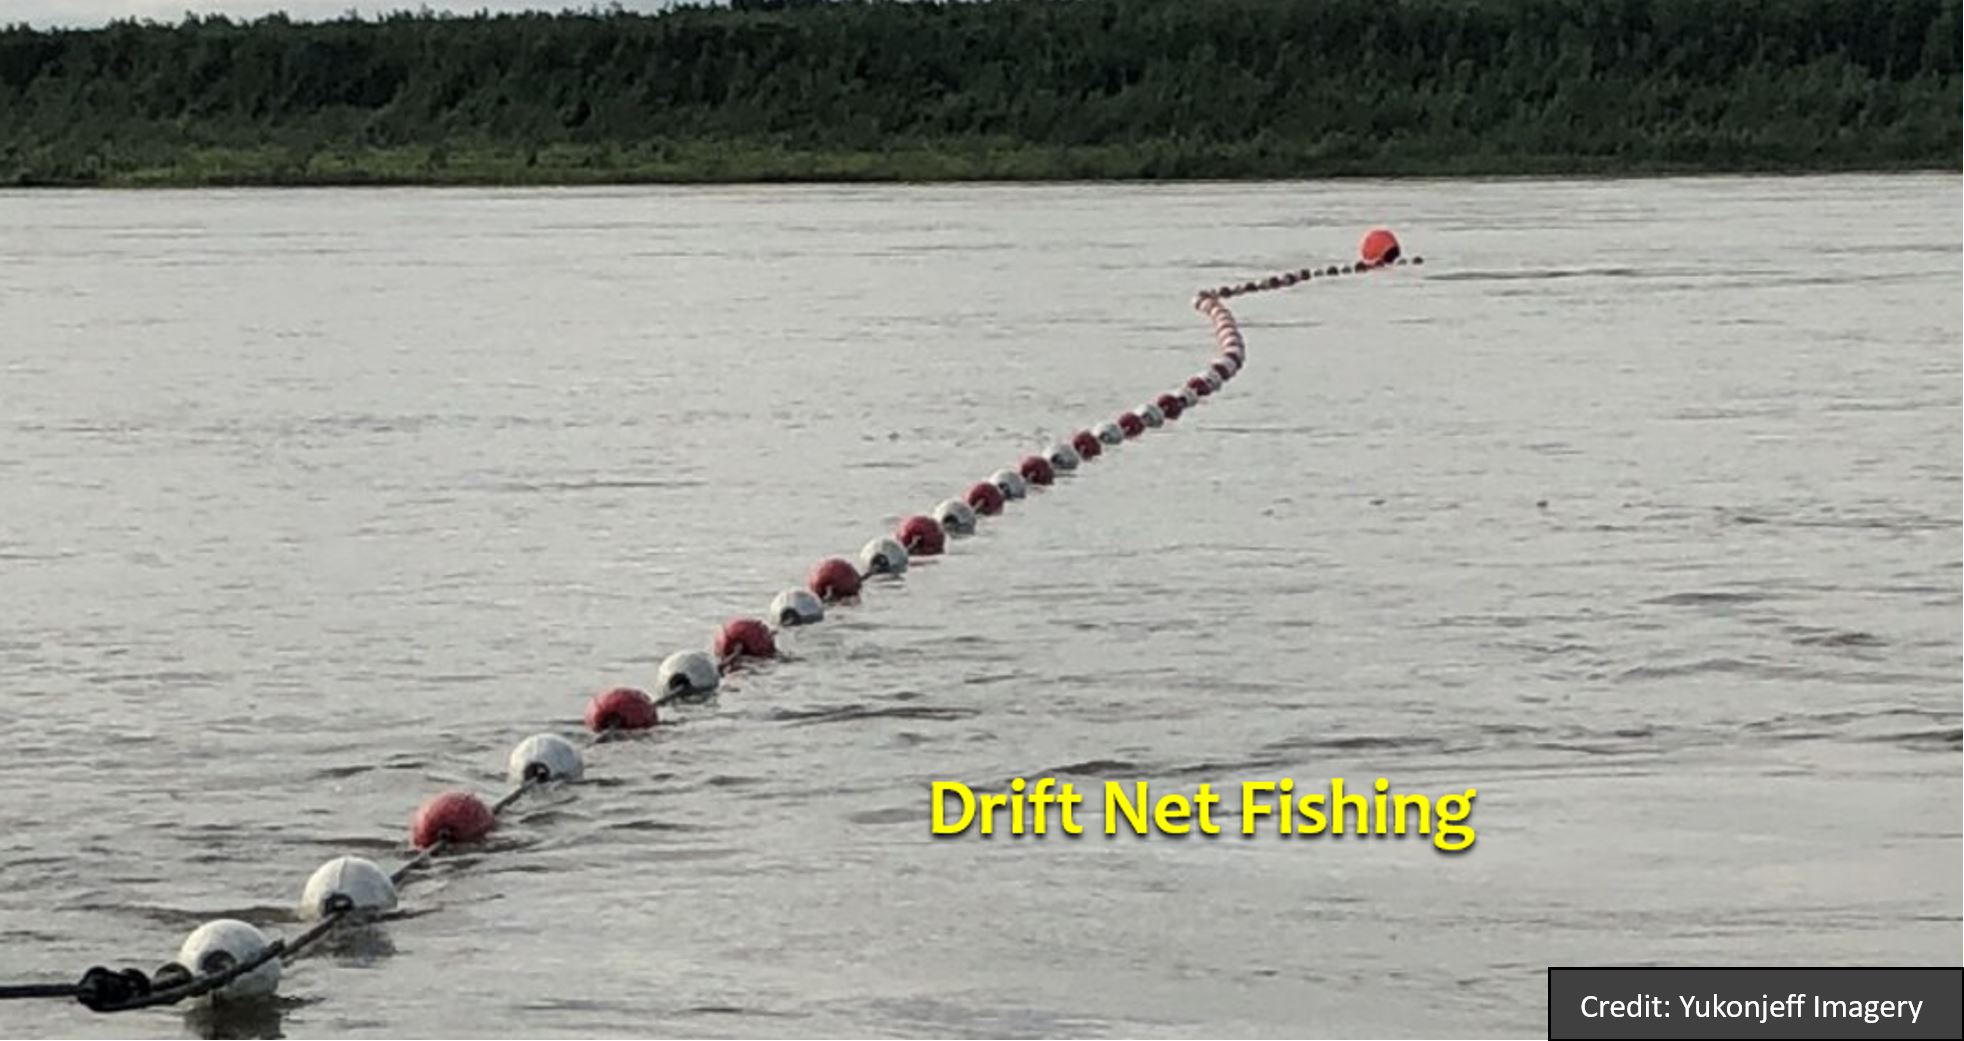 Drift netting